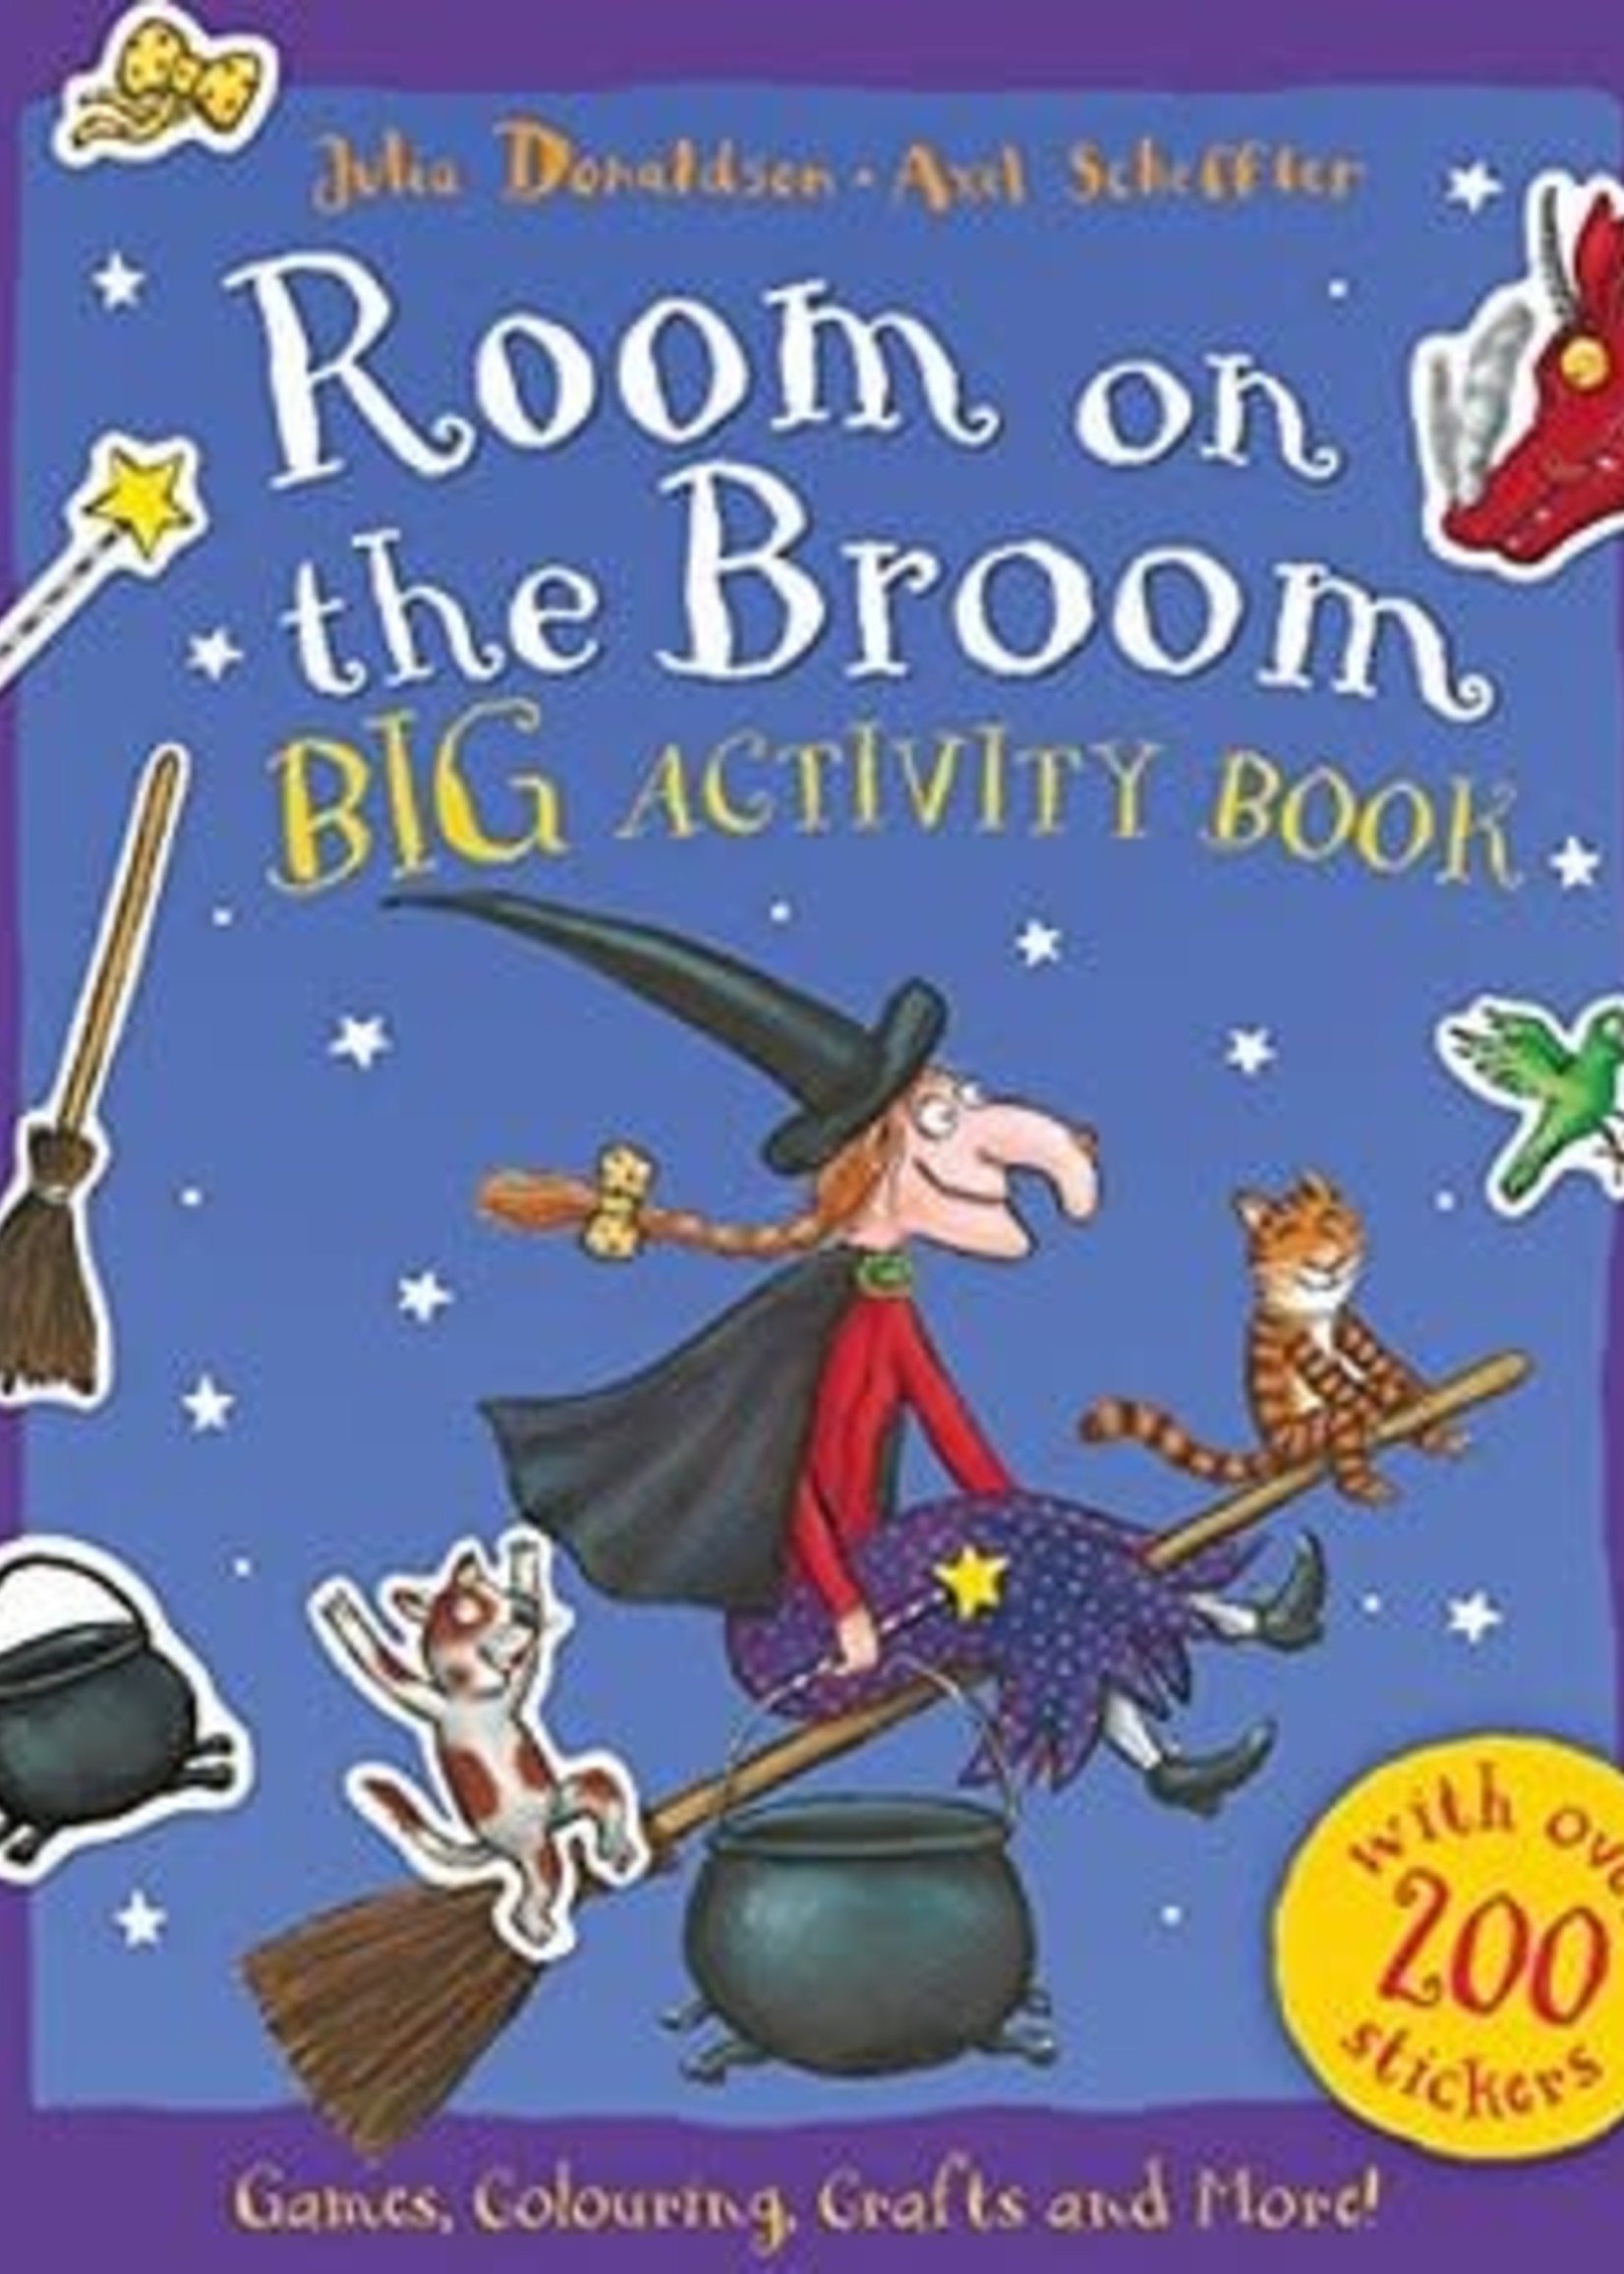 Room on the Broom Big Activity Book by Julia Donaldson, Axel Scheffler